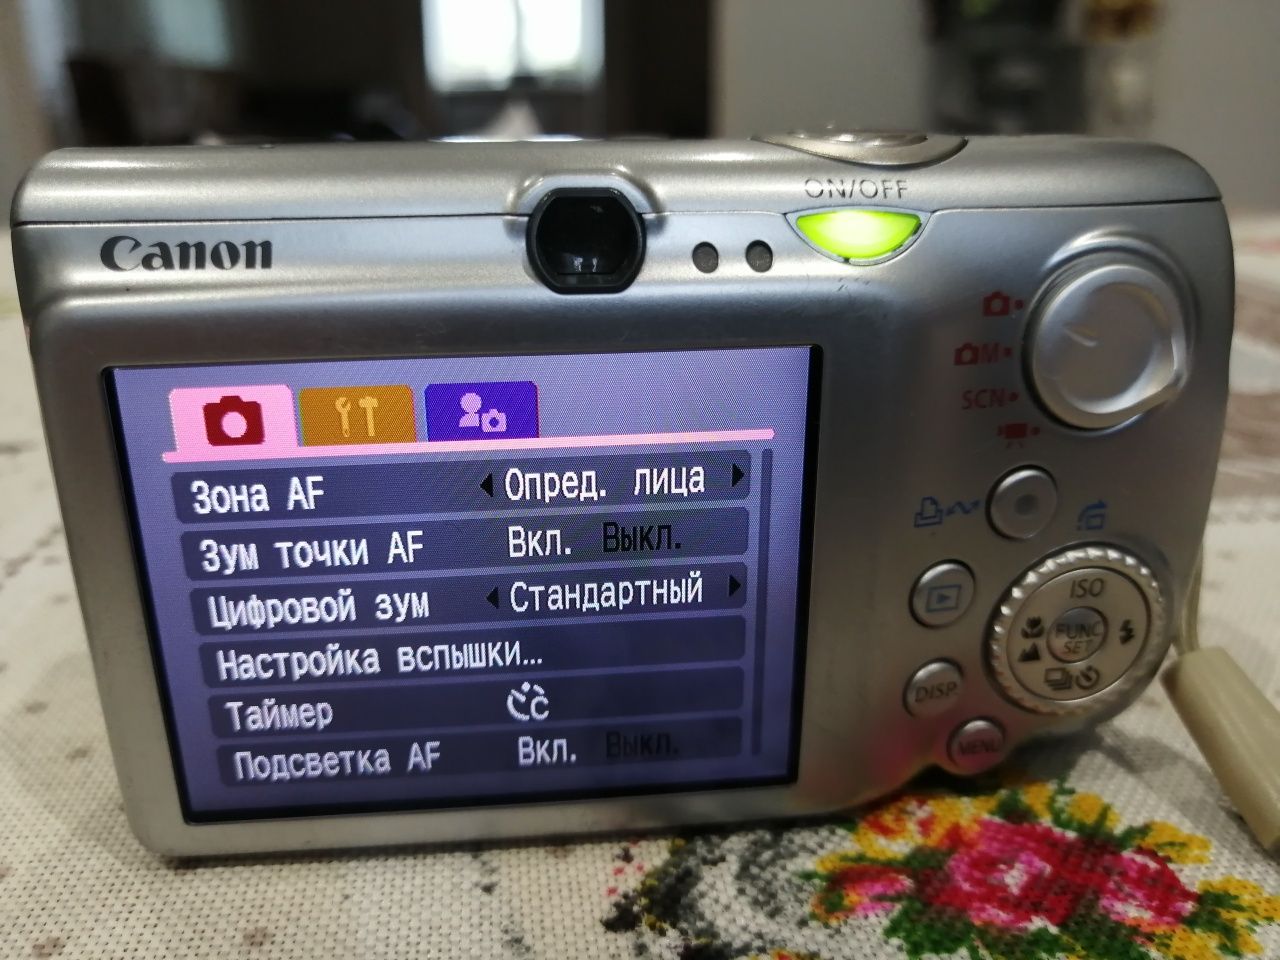 Canon sd890 is digital elpn